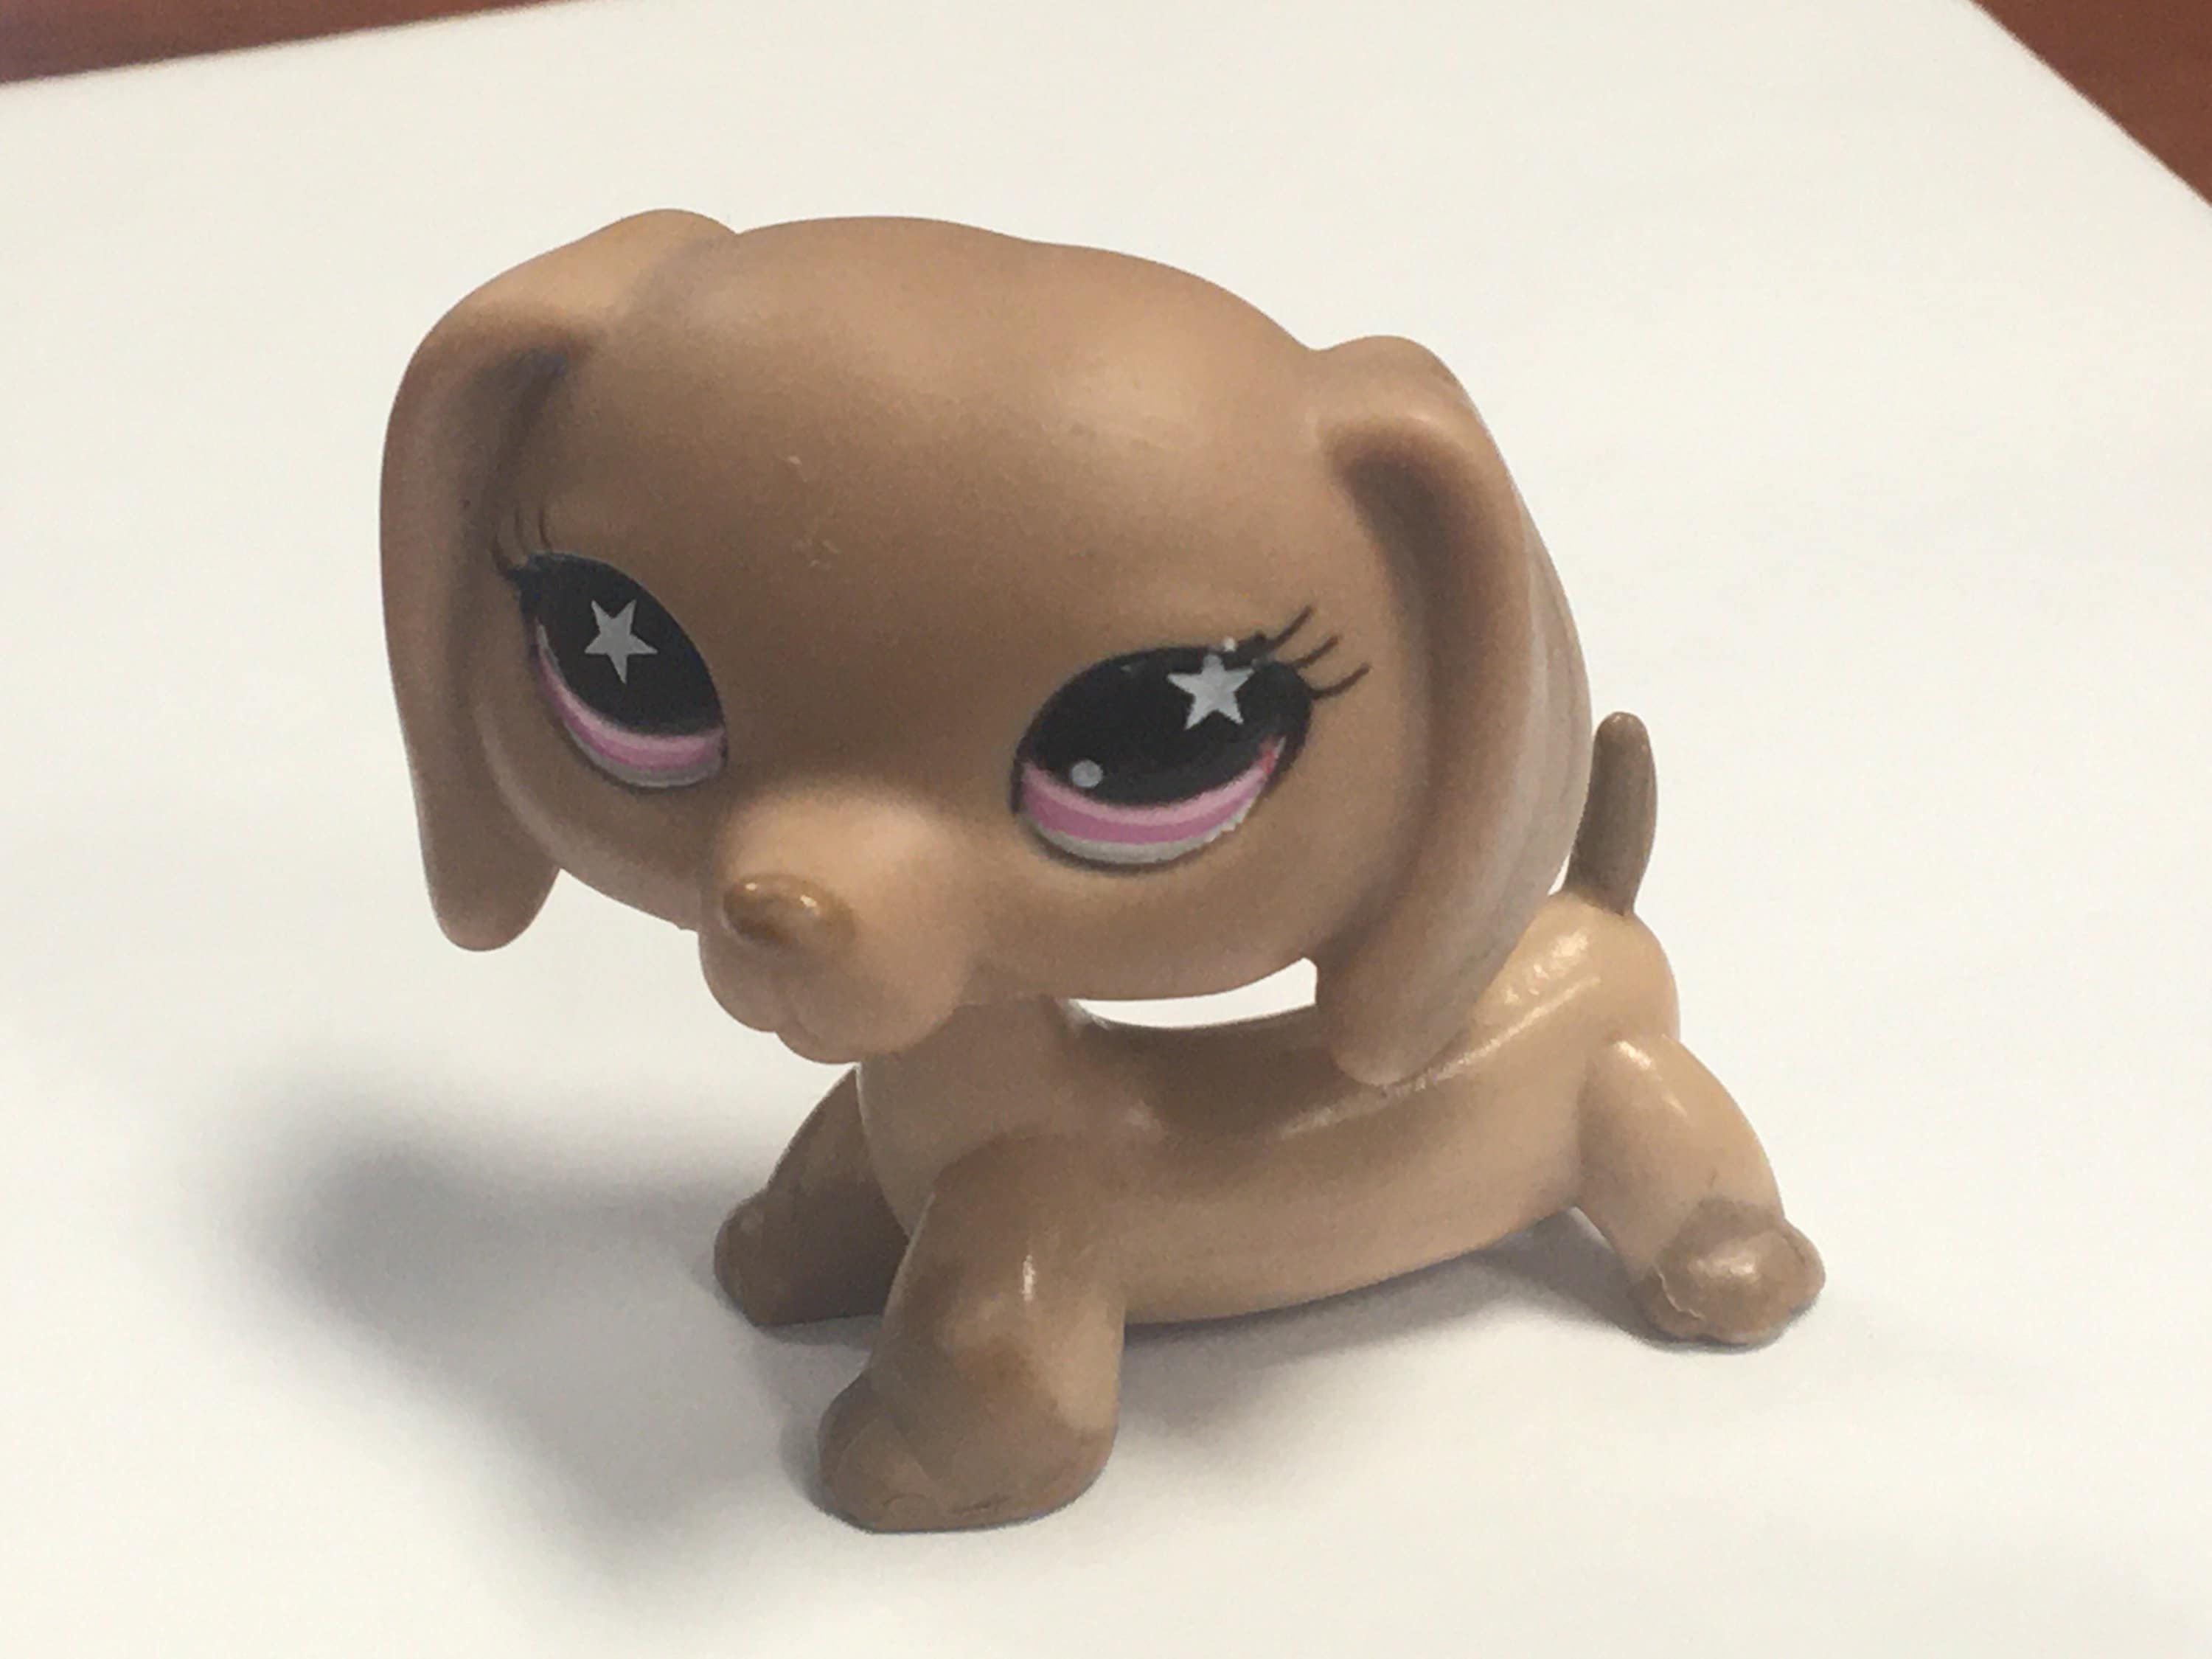 Littlest Pet Shop Animal Green Eyes Tan Brown Fox Figure Doll Child Toy 